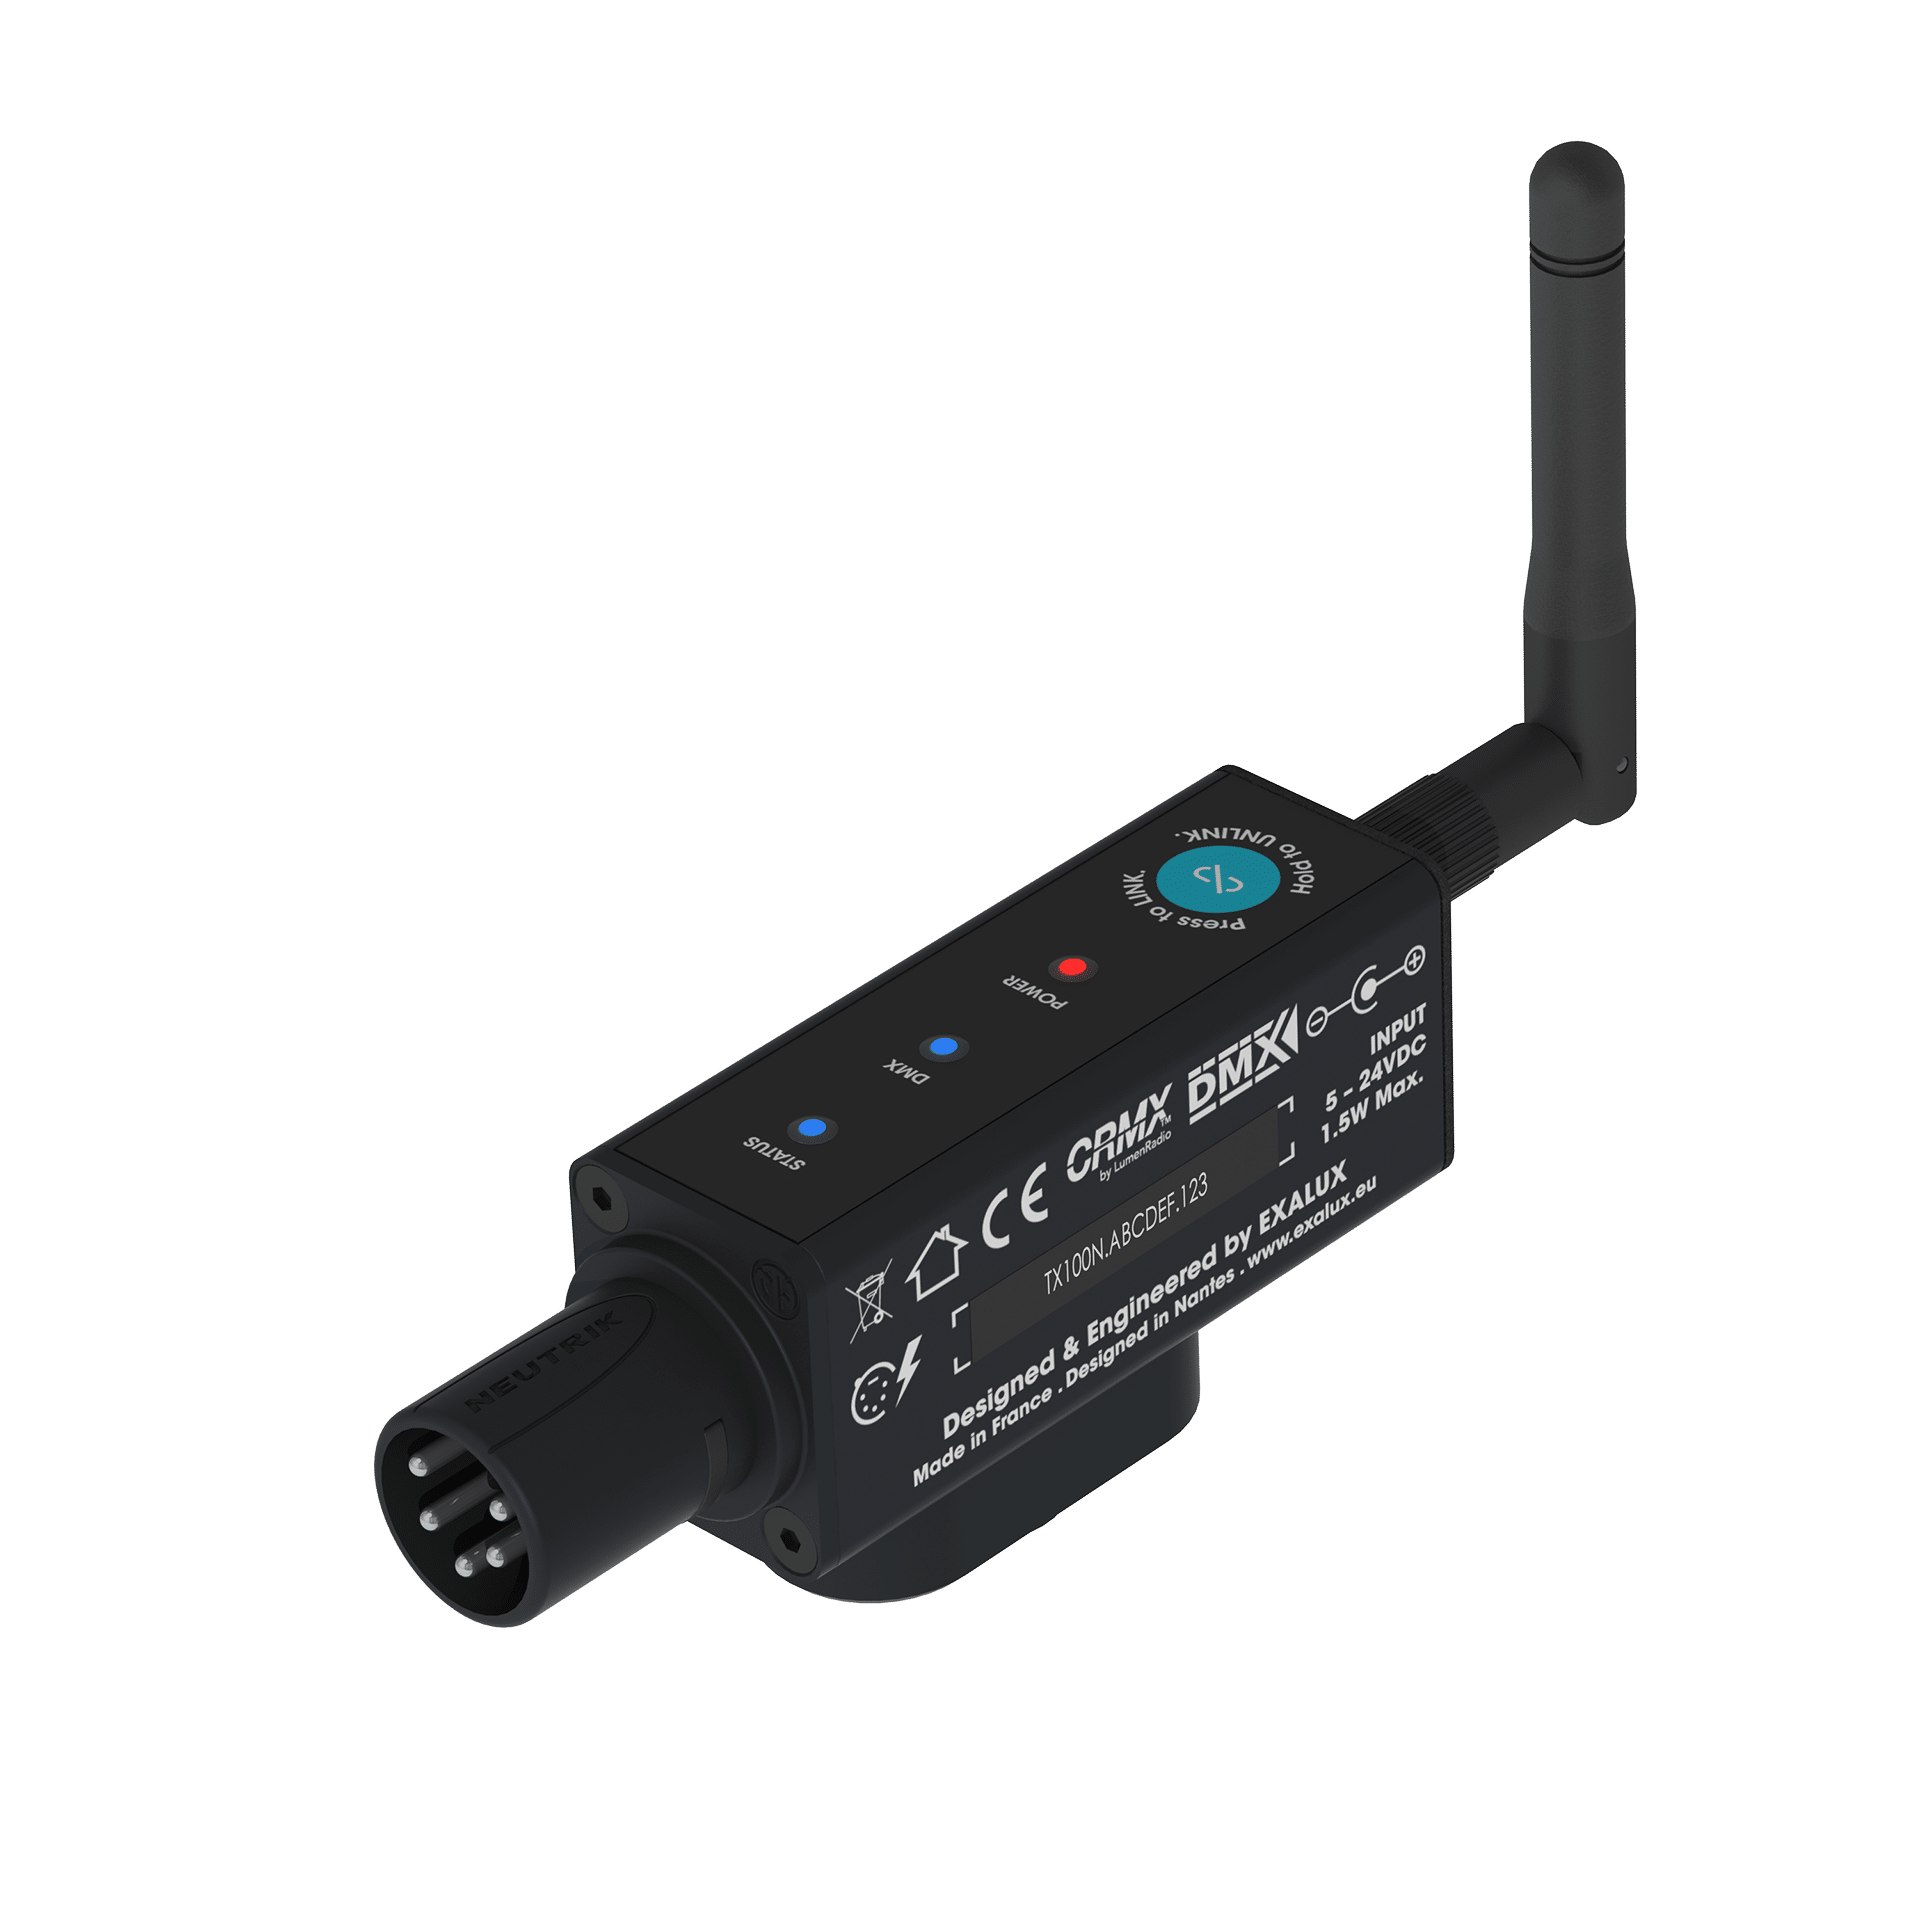 Exalux CONNECT TX100N "Basic Kit"